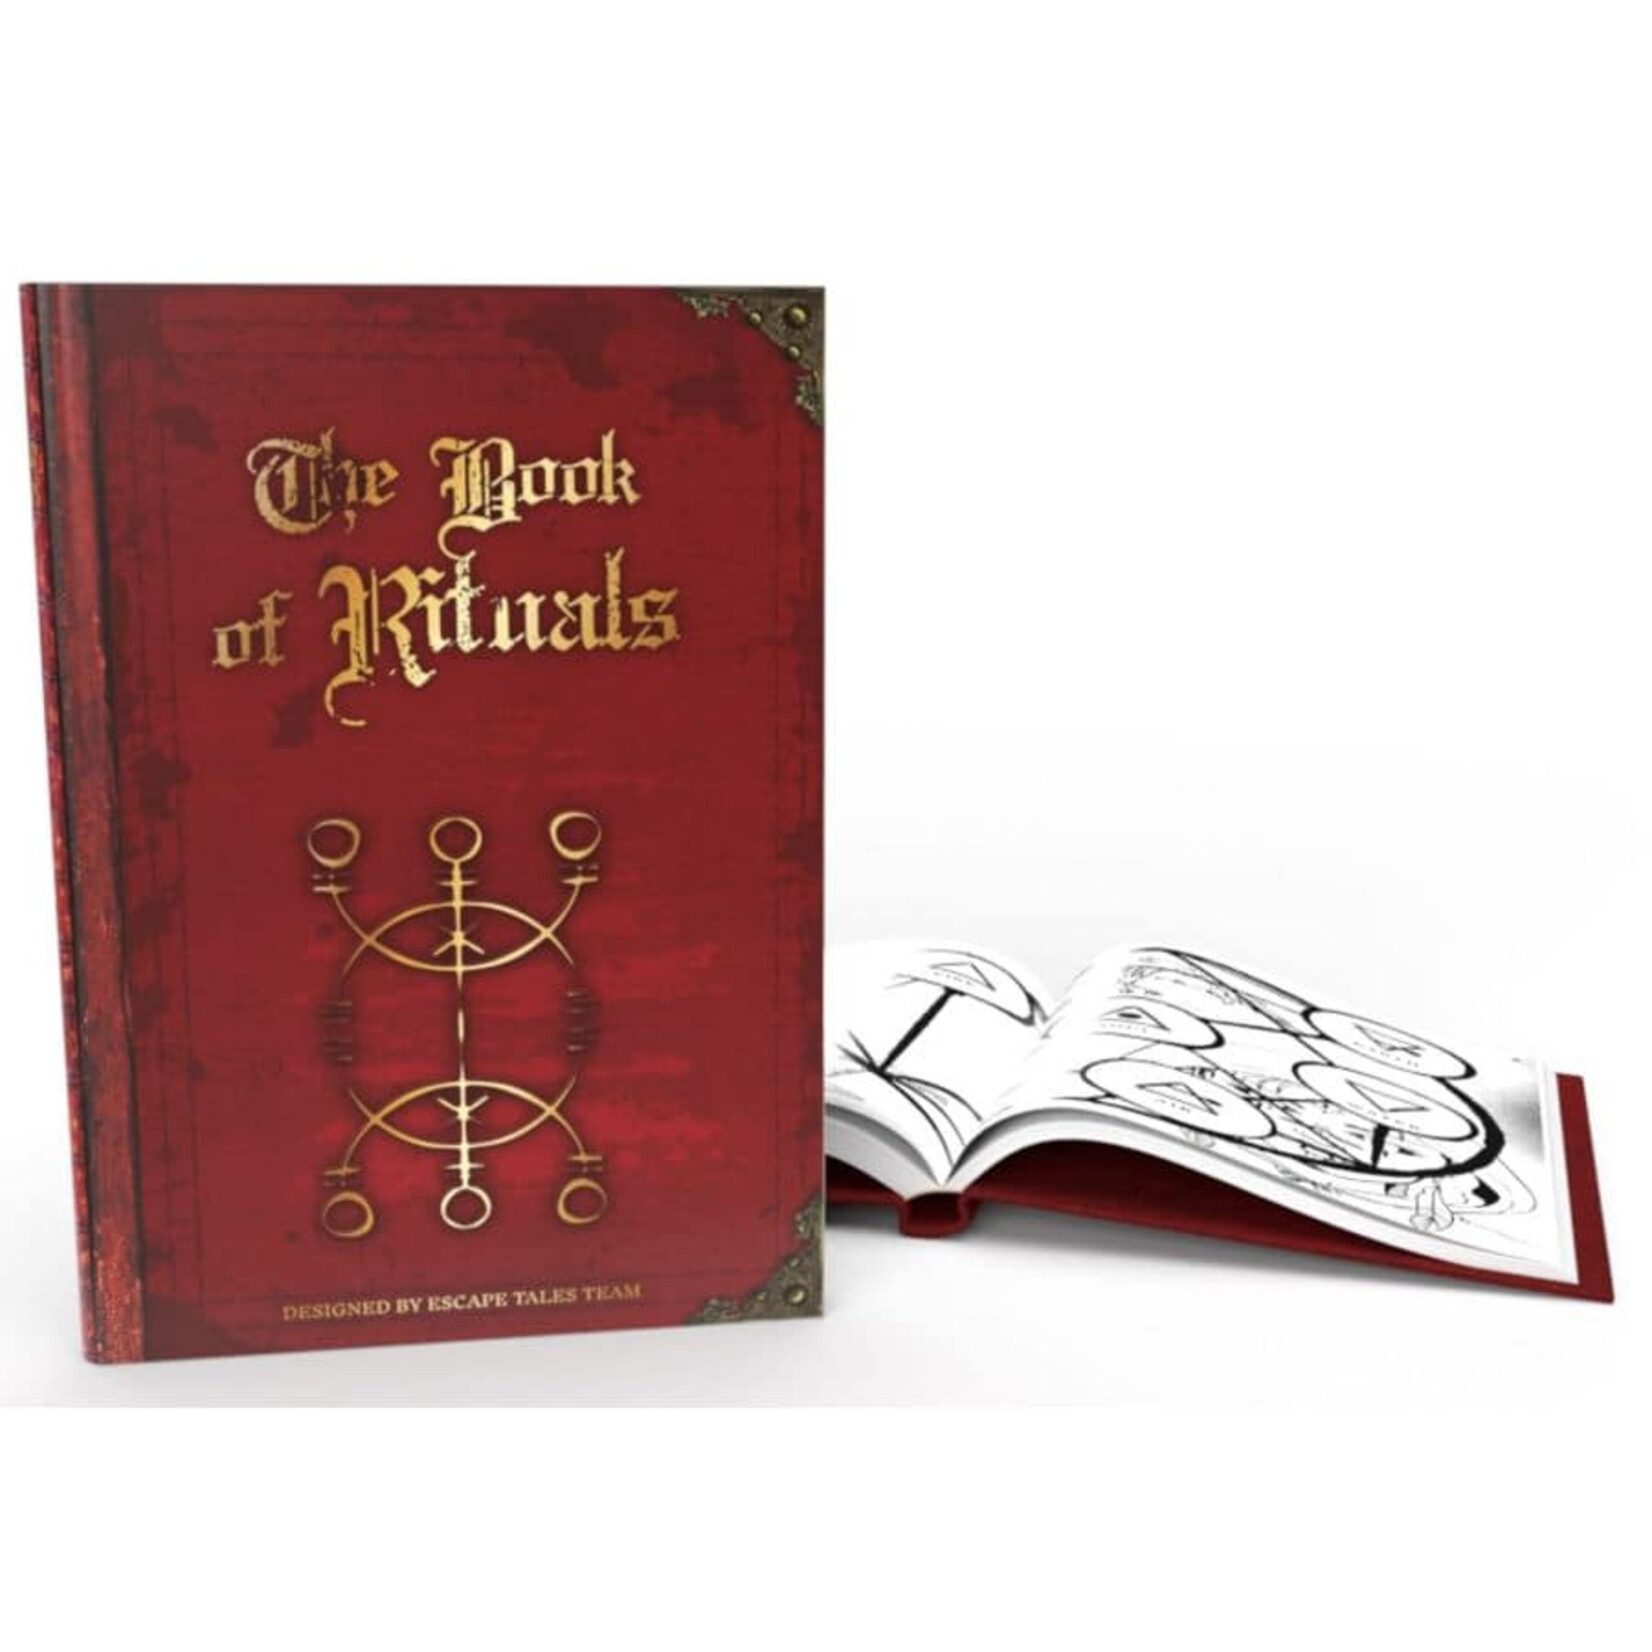 Board and Dice Book of Rituals